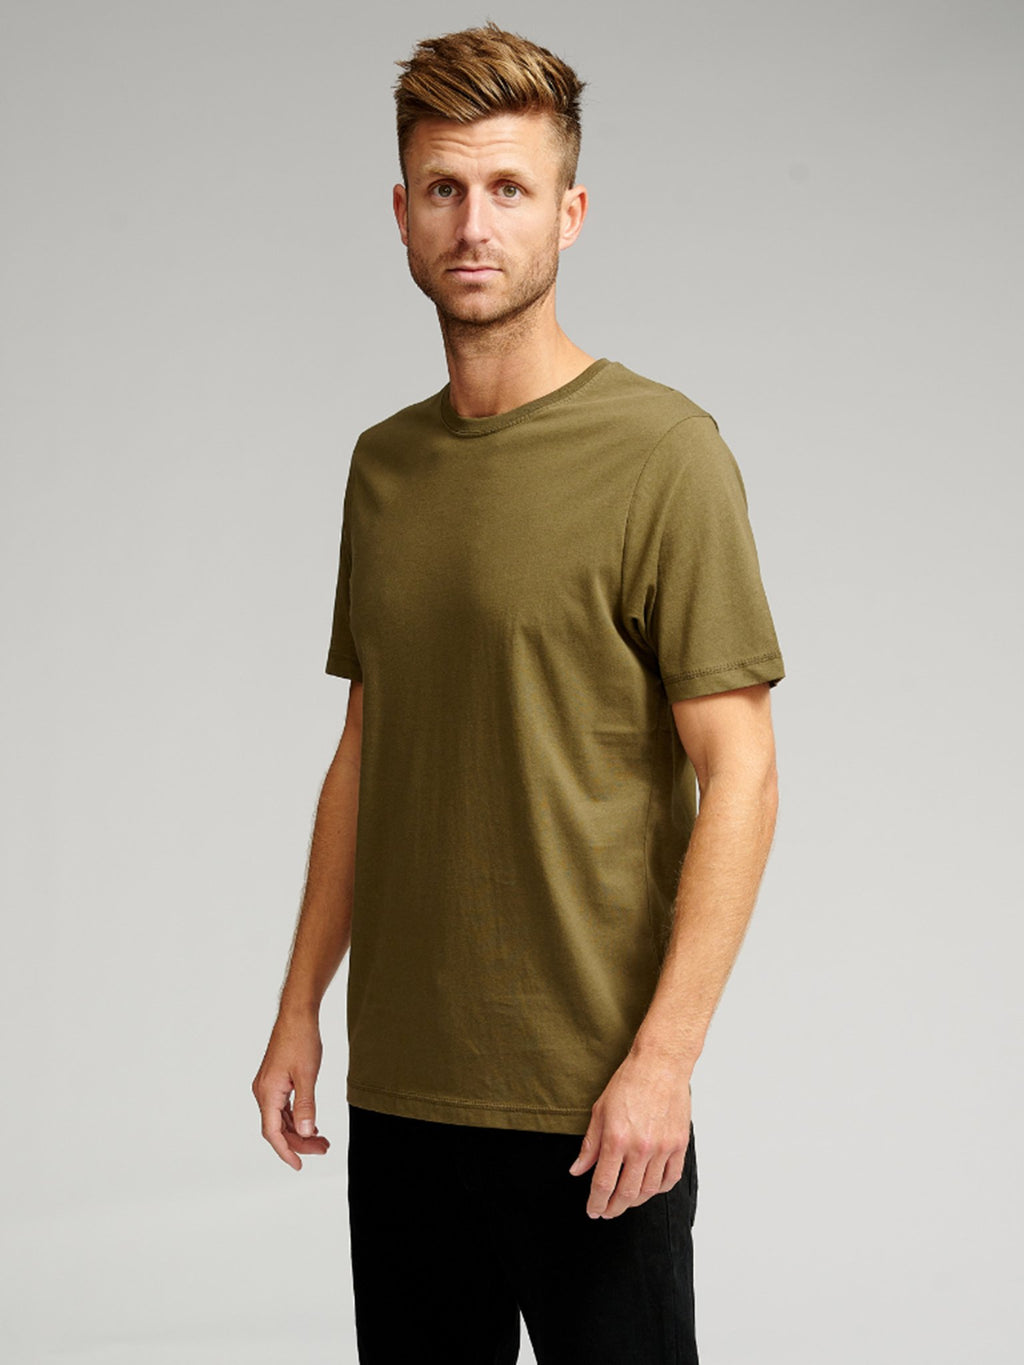 Organic Basic T-shirt - Army